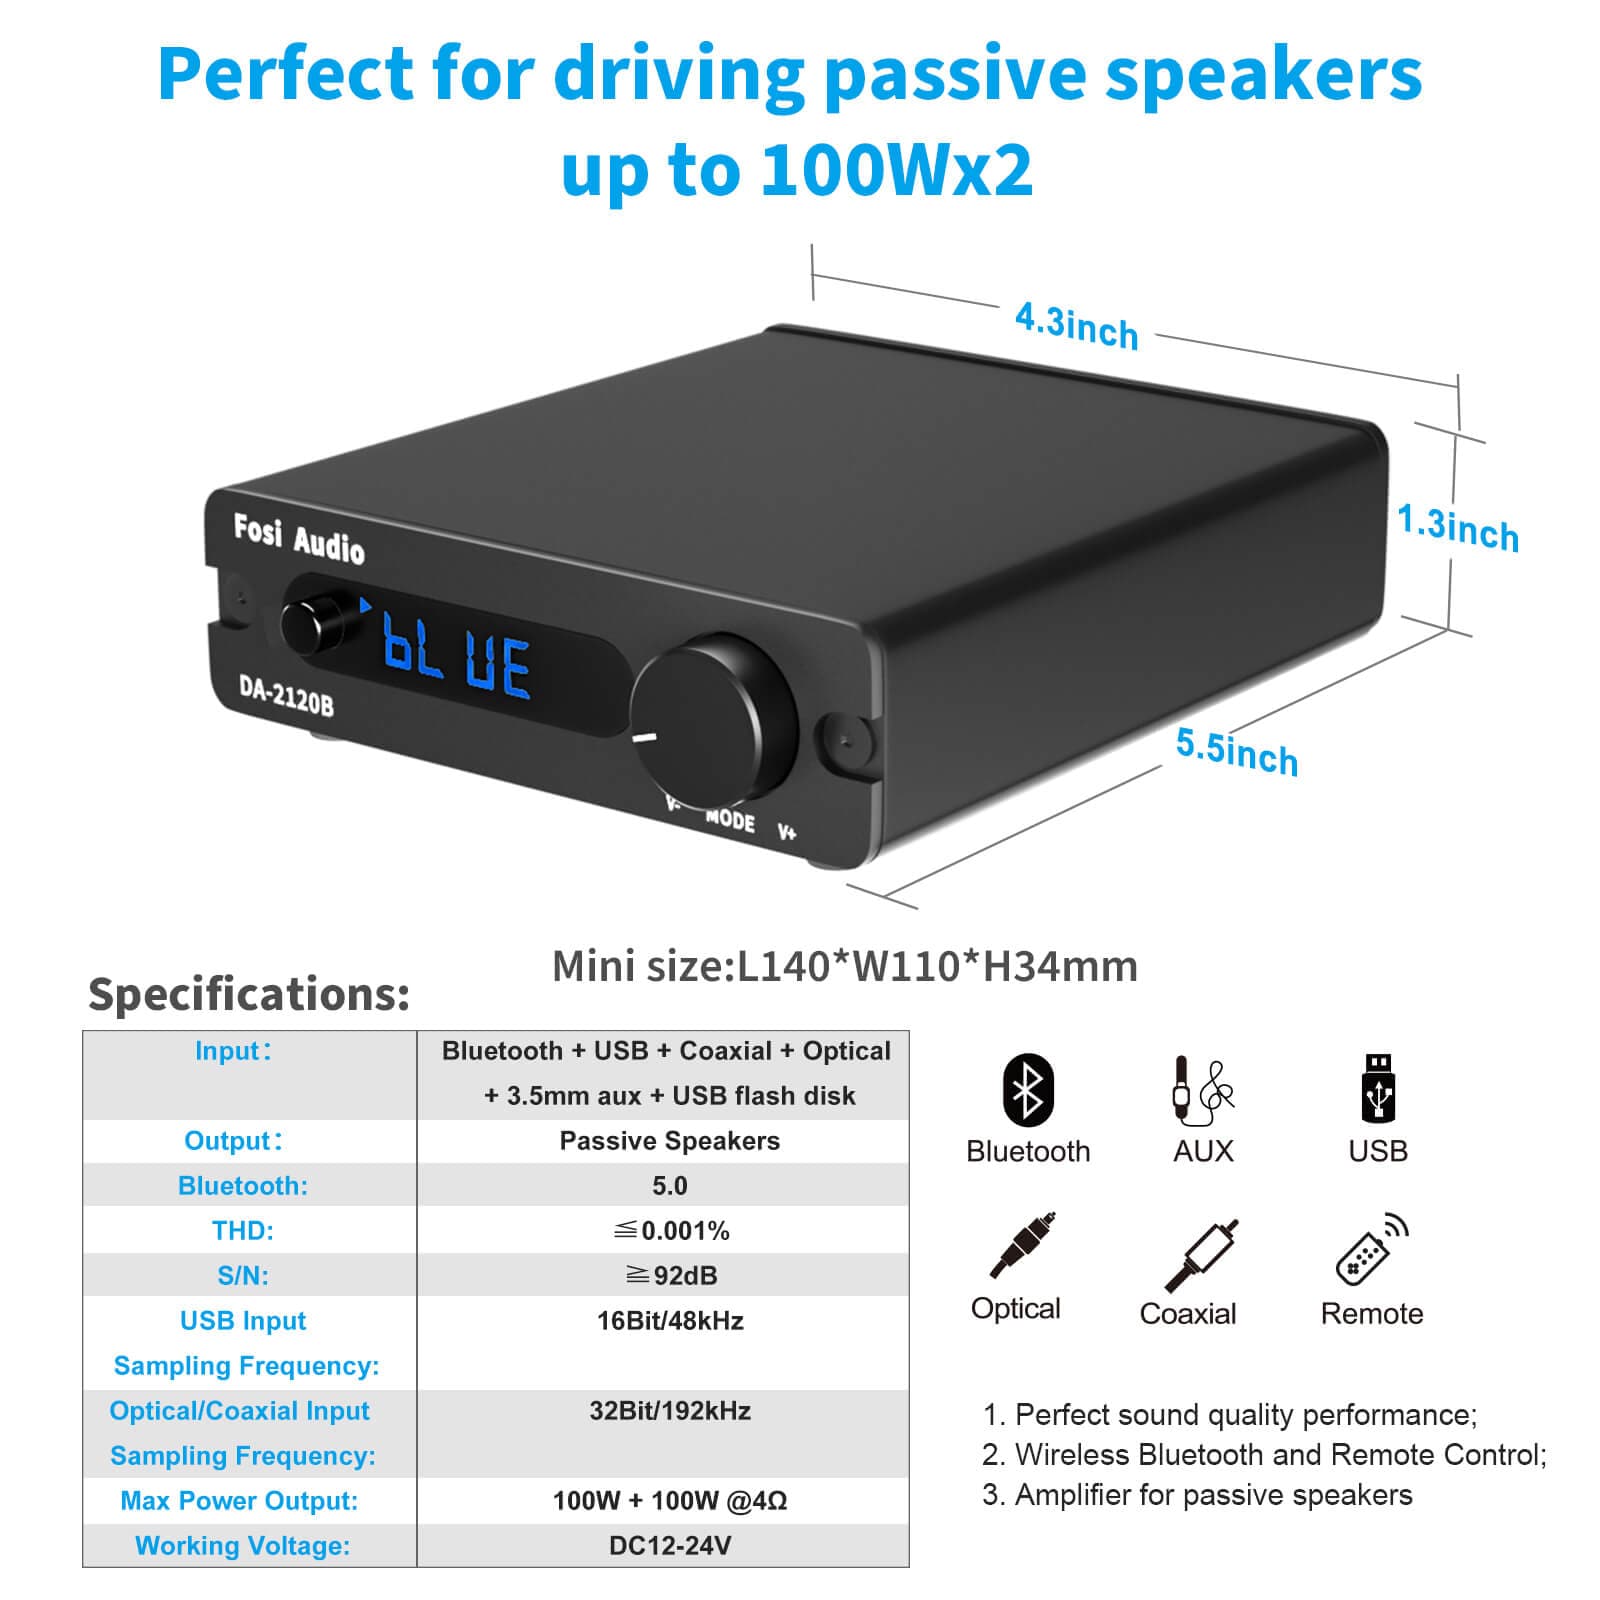 Class D Power Amp 100W x2 Passive Speakers Remote Control